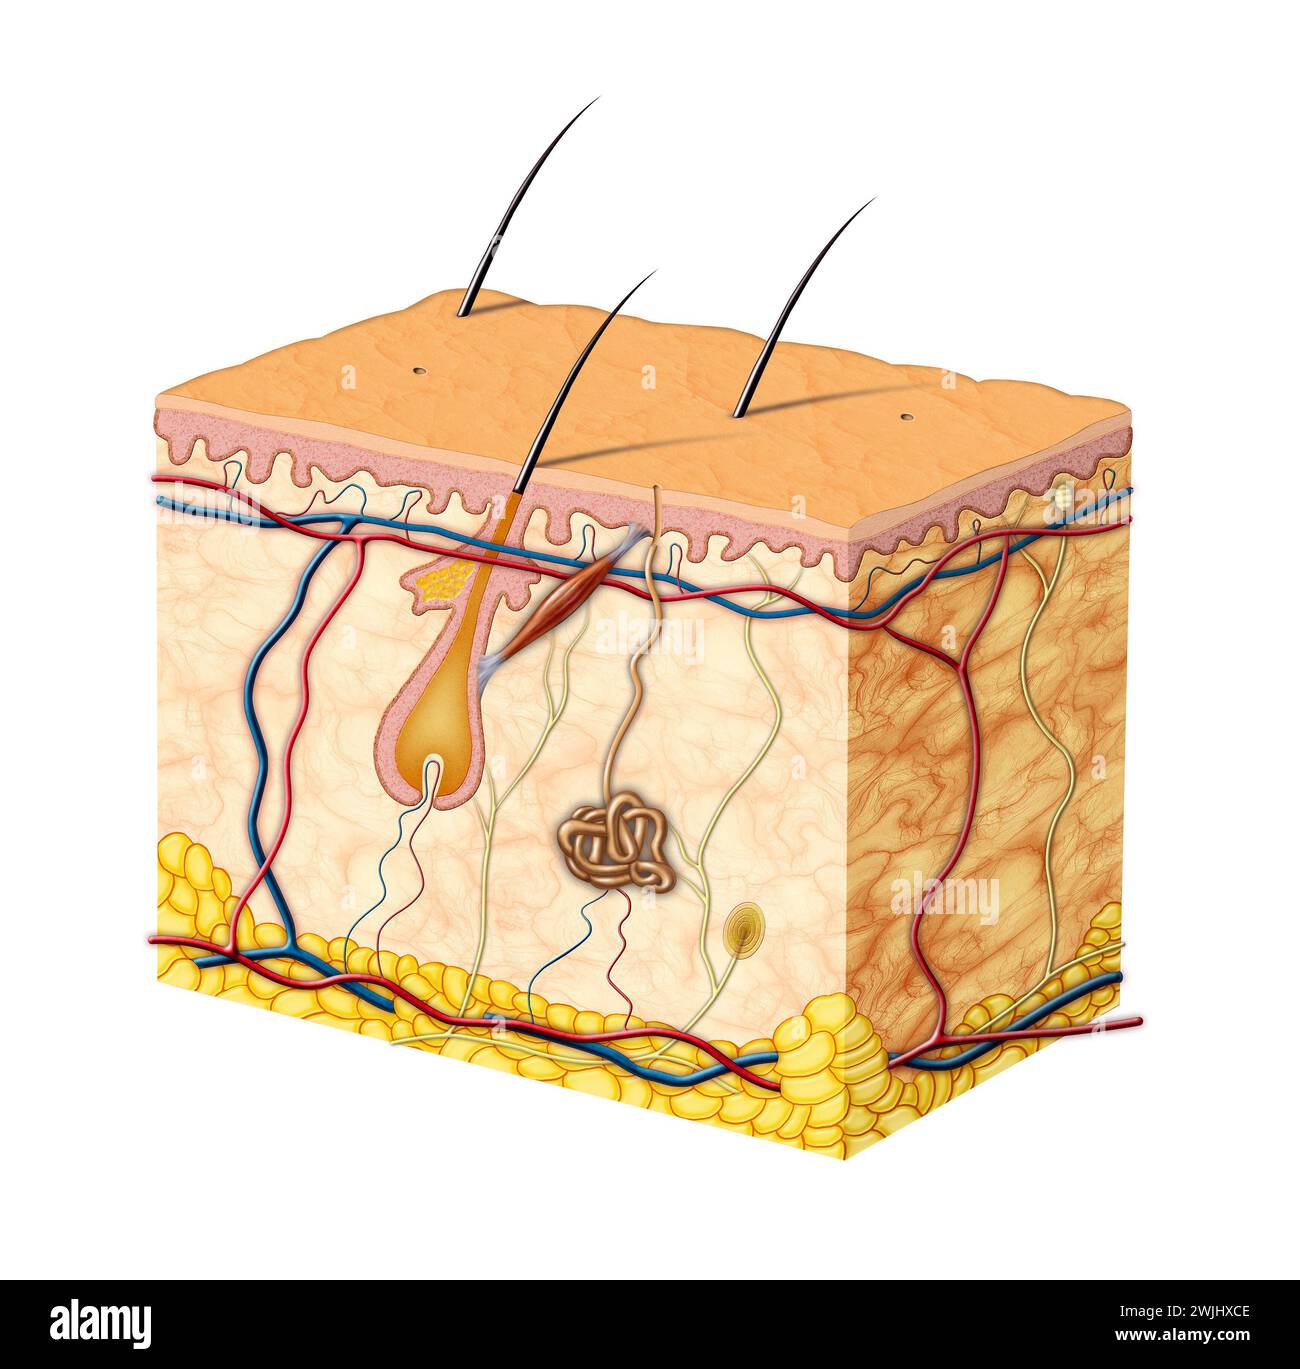 Human skin anatomy. Digital illustration. Stock Photo